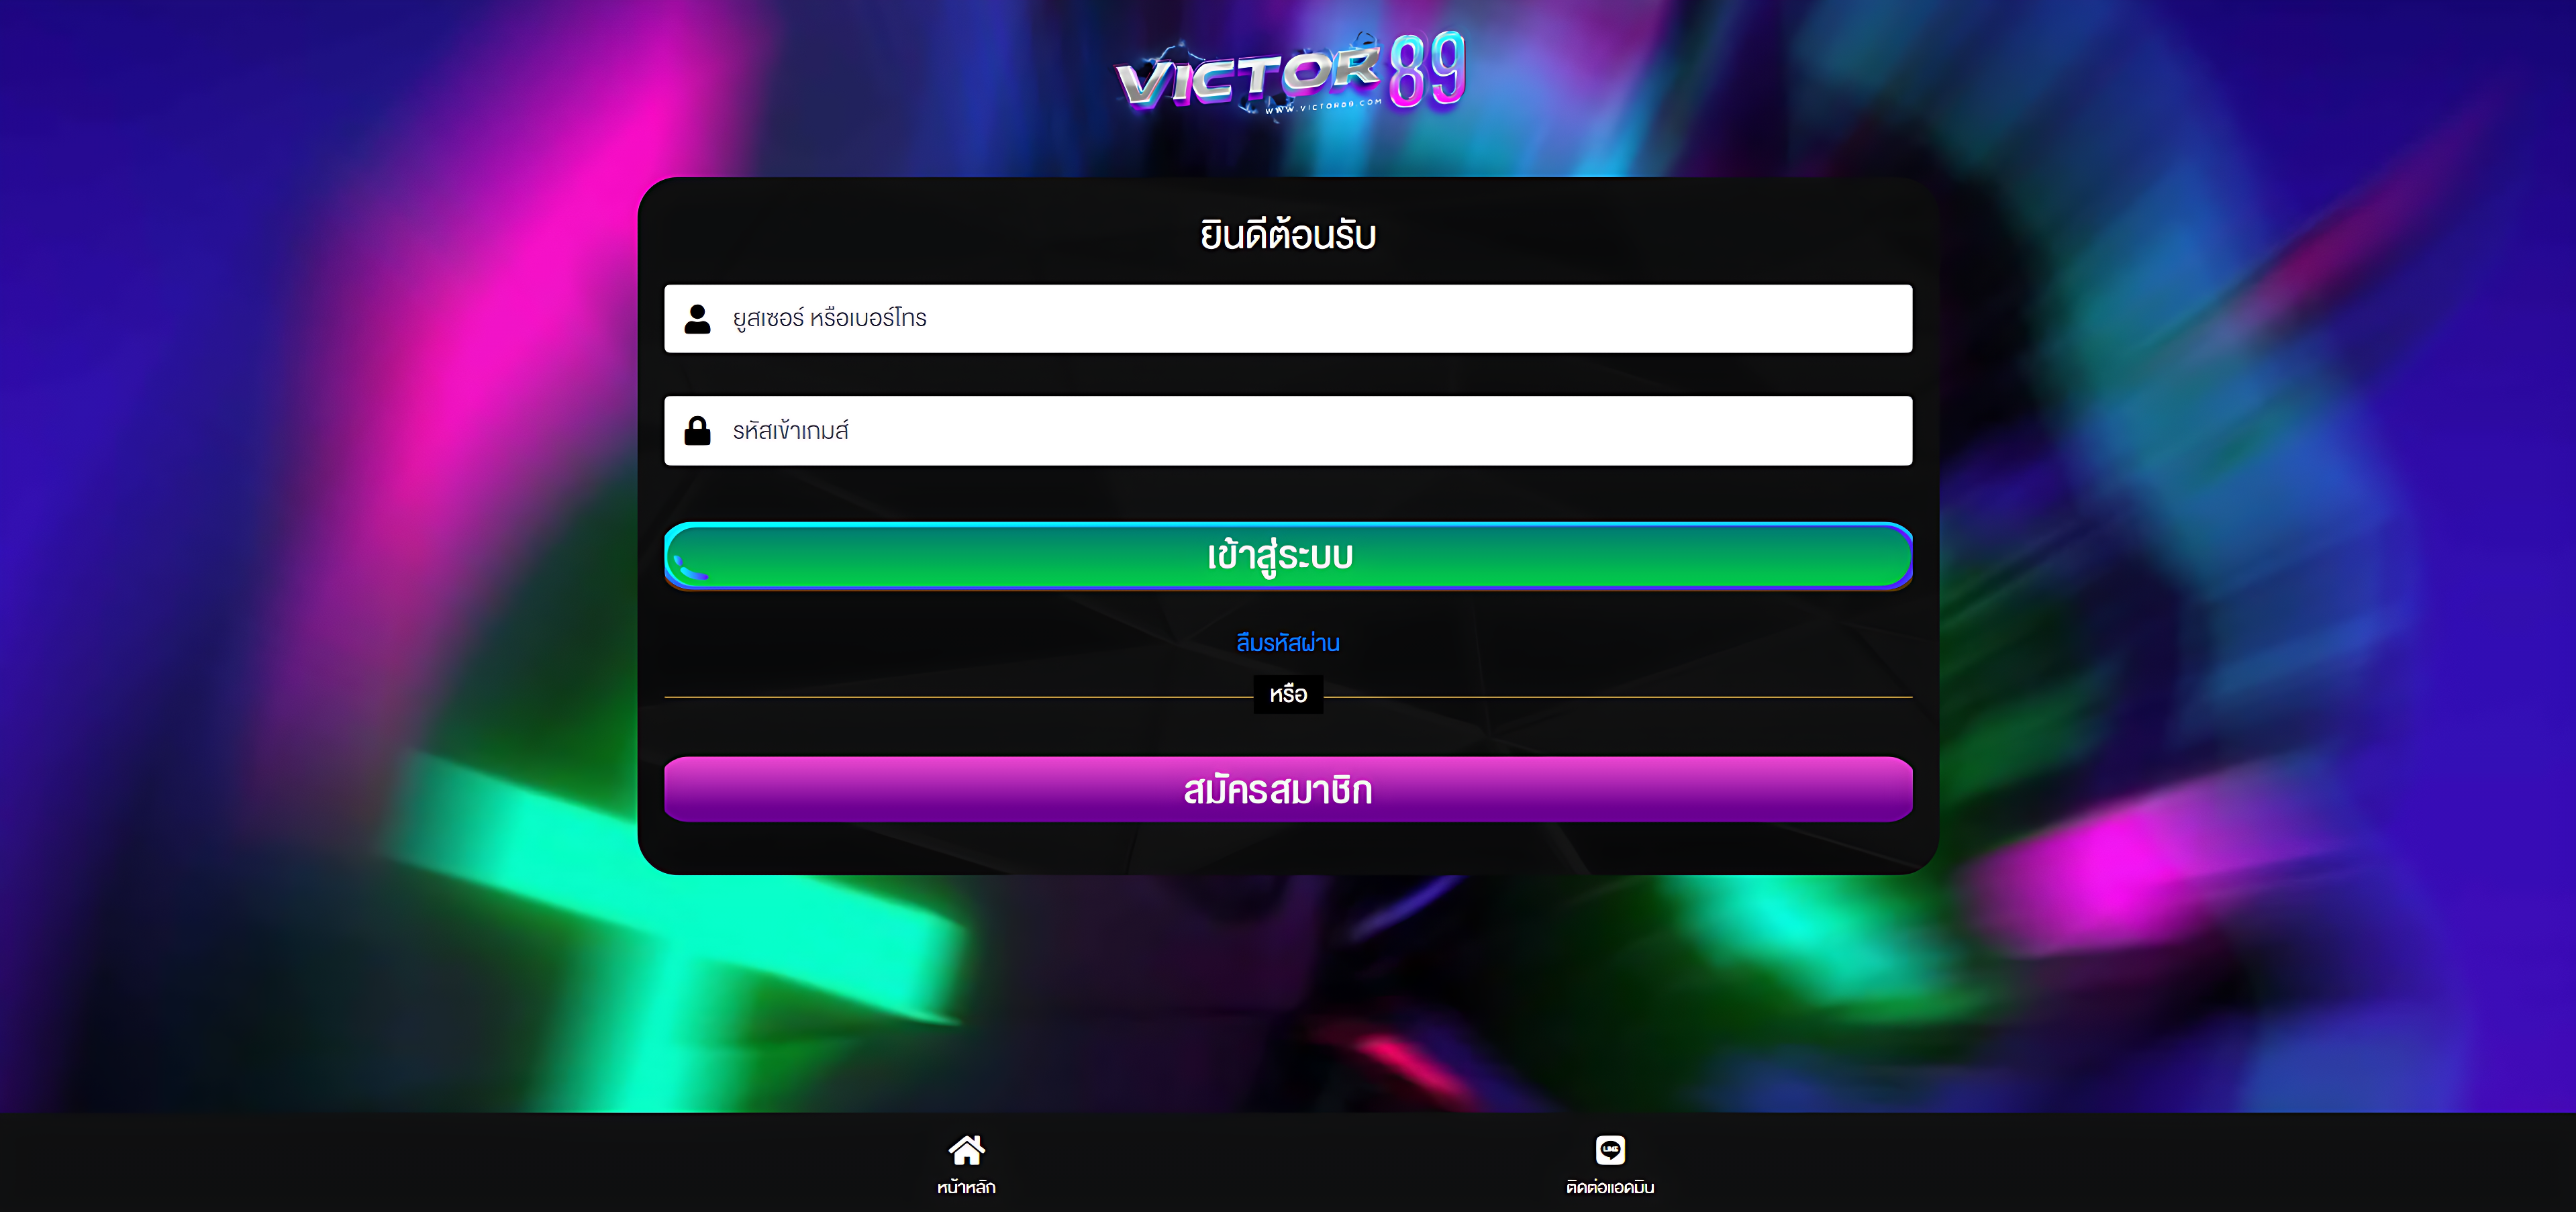 victor89